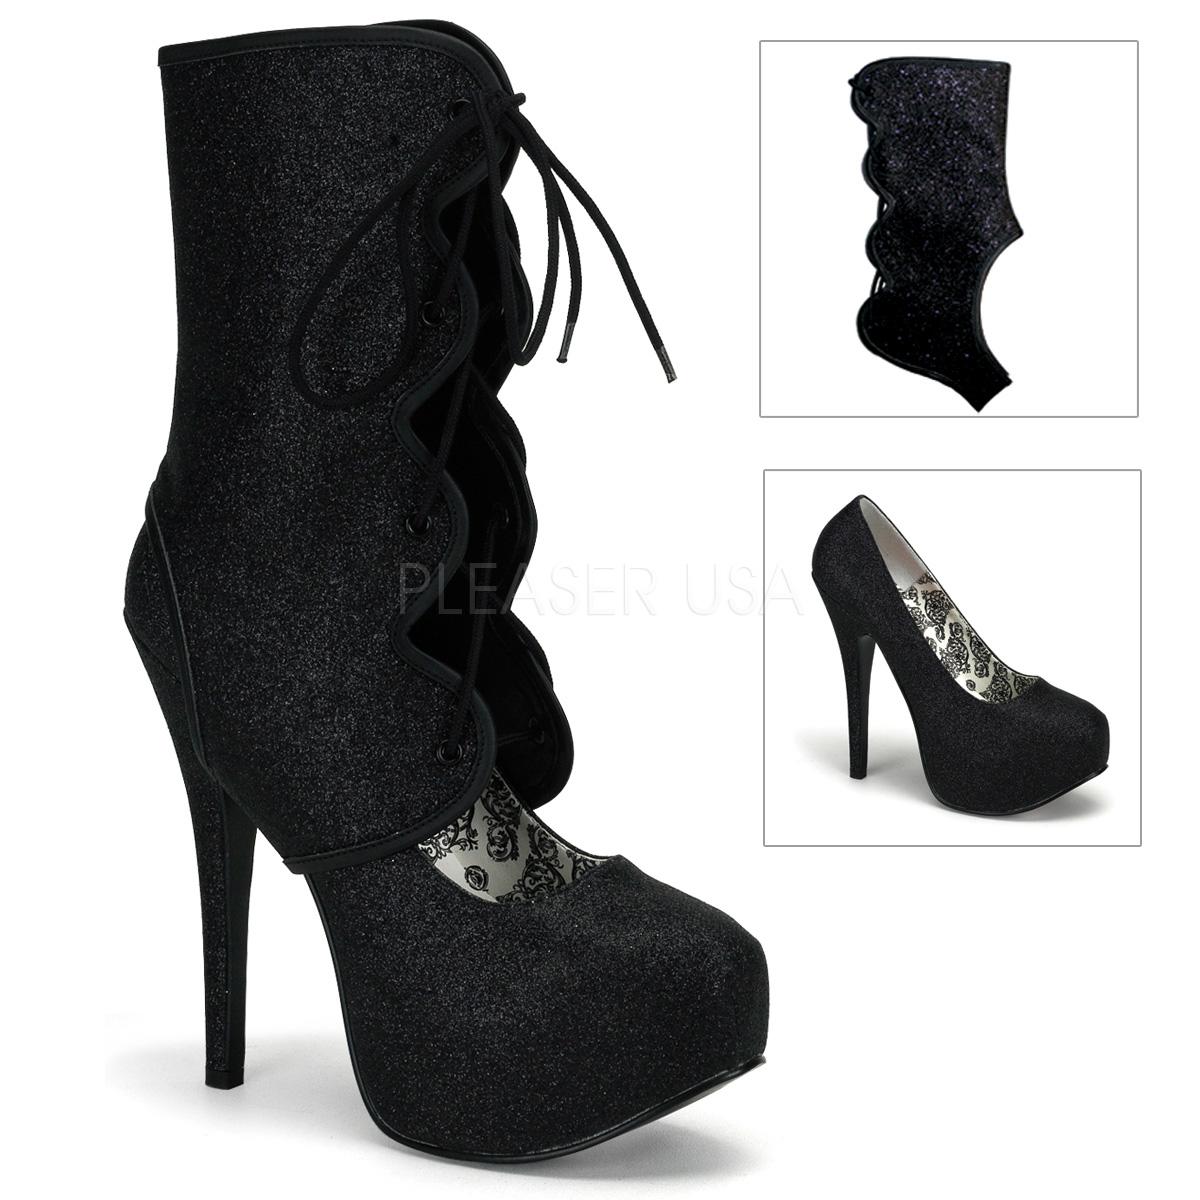 Black Glitter Court Shoe/Boot